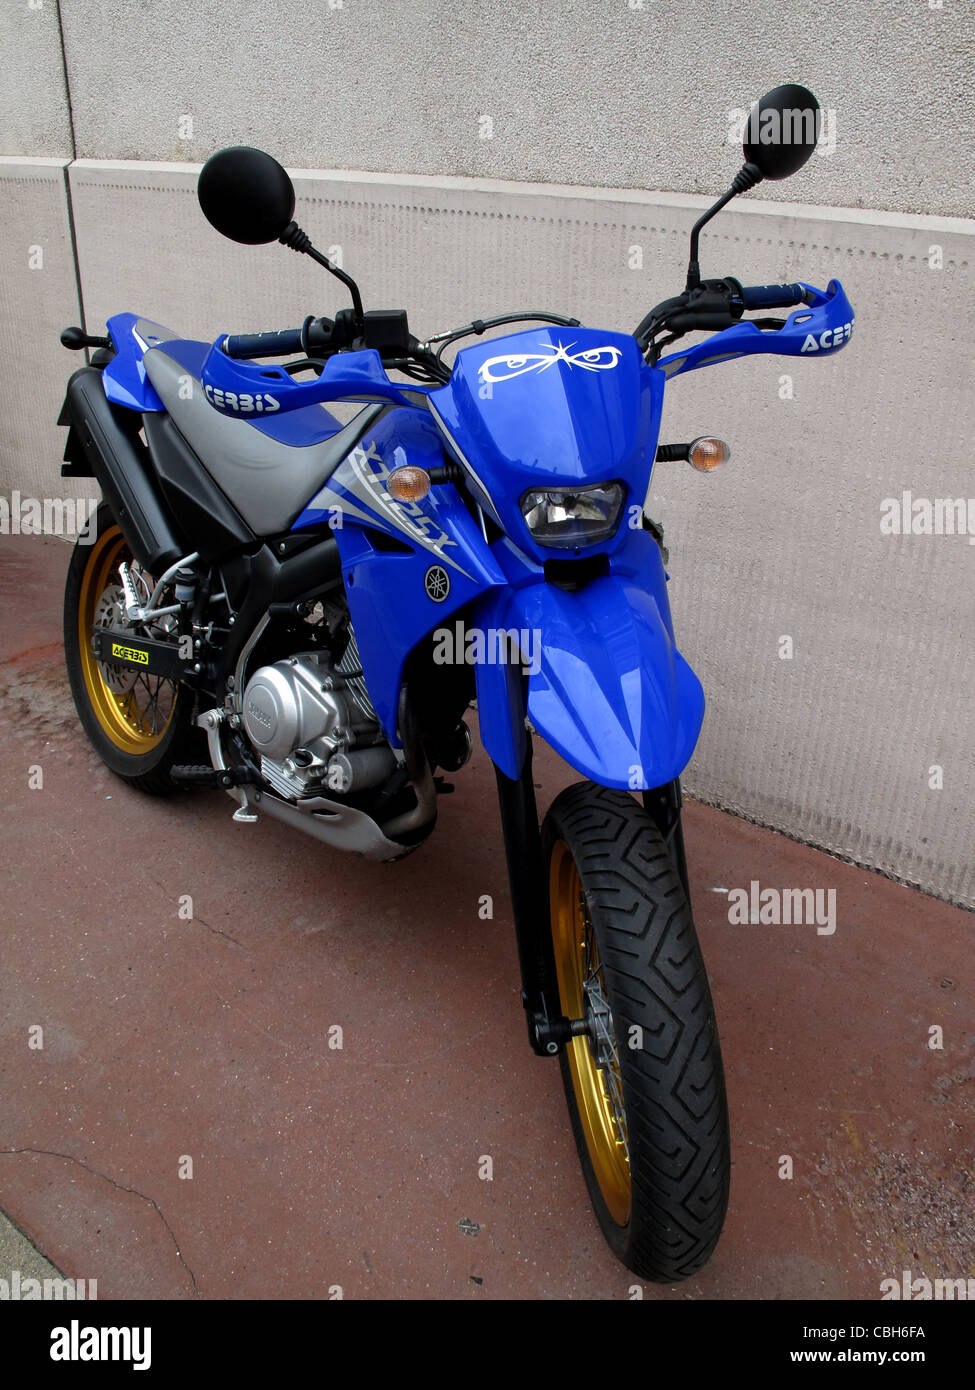 Yamaha motorrad -Fotos und -Bildmaterial in hoher Auflösung – Alamy